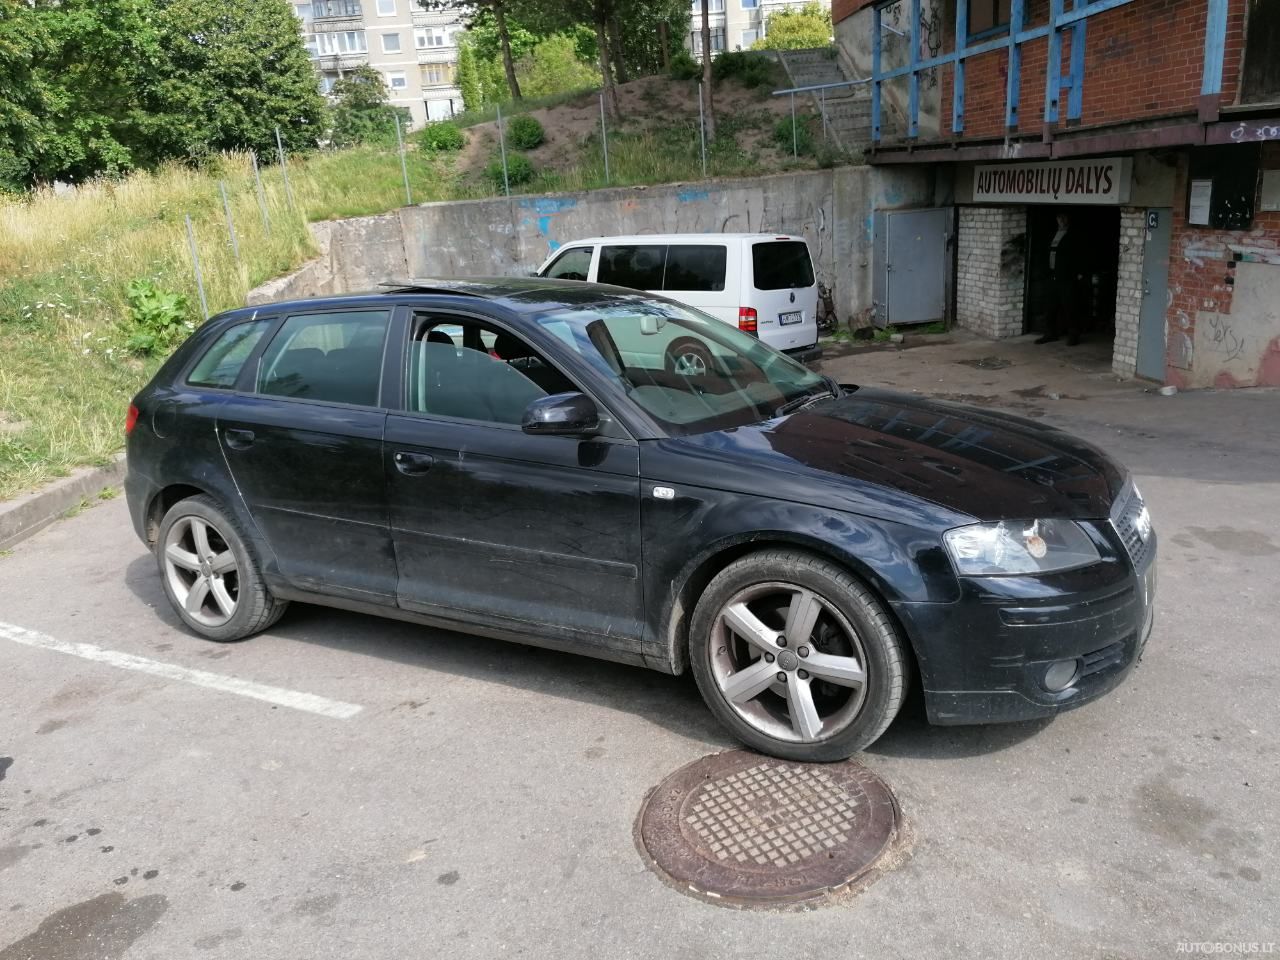 Audi A3, Hečbekas | 3